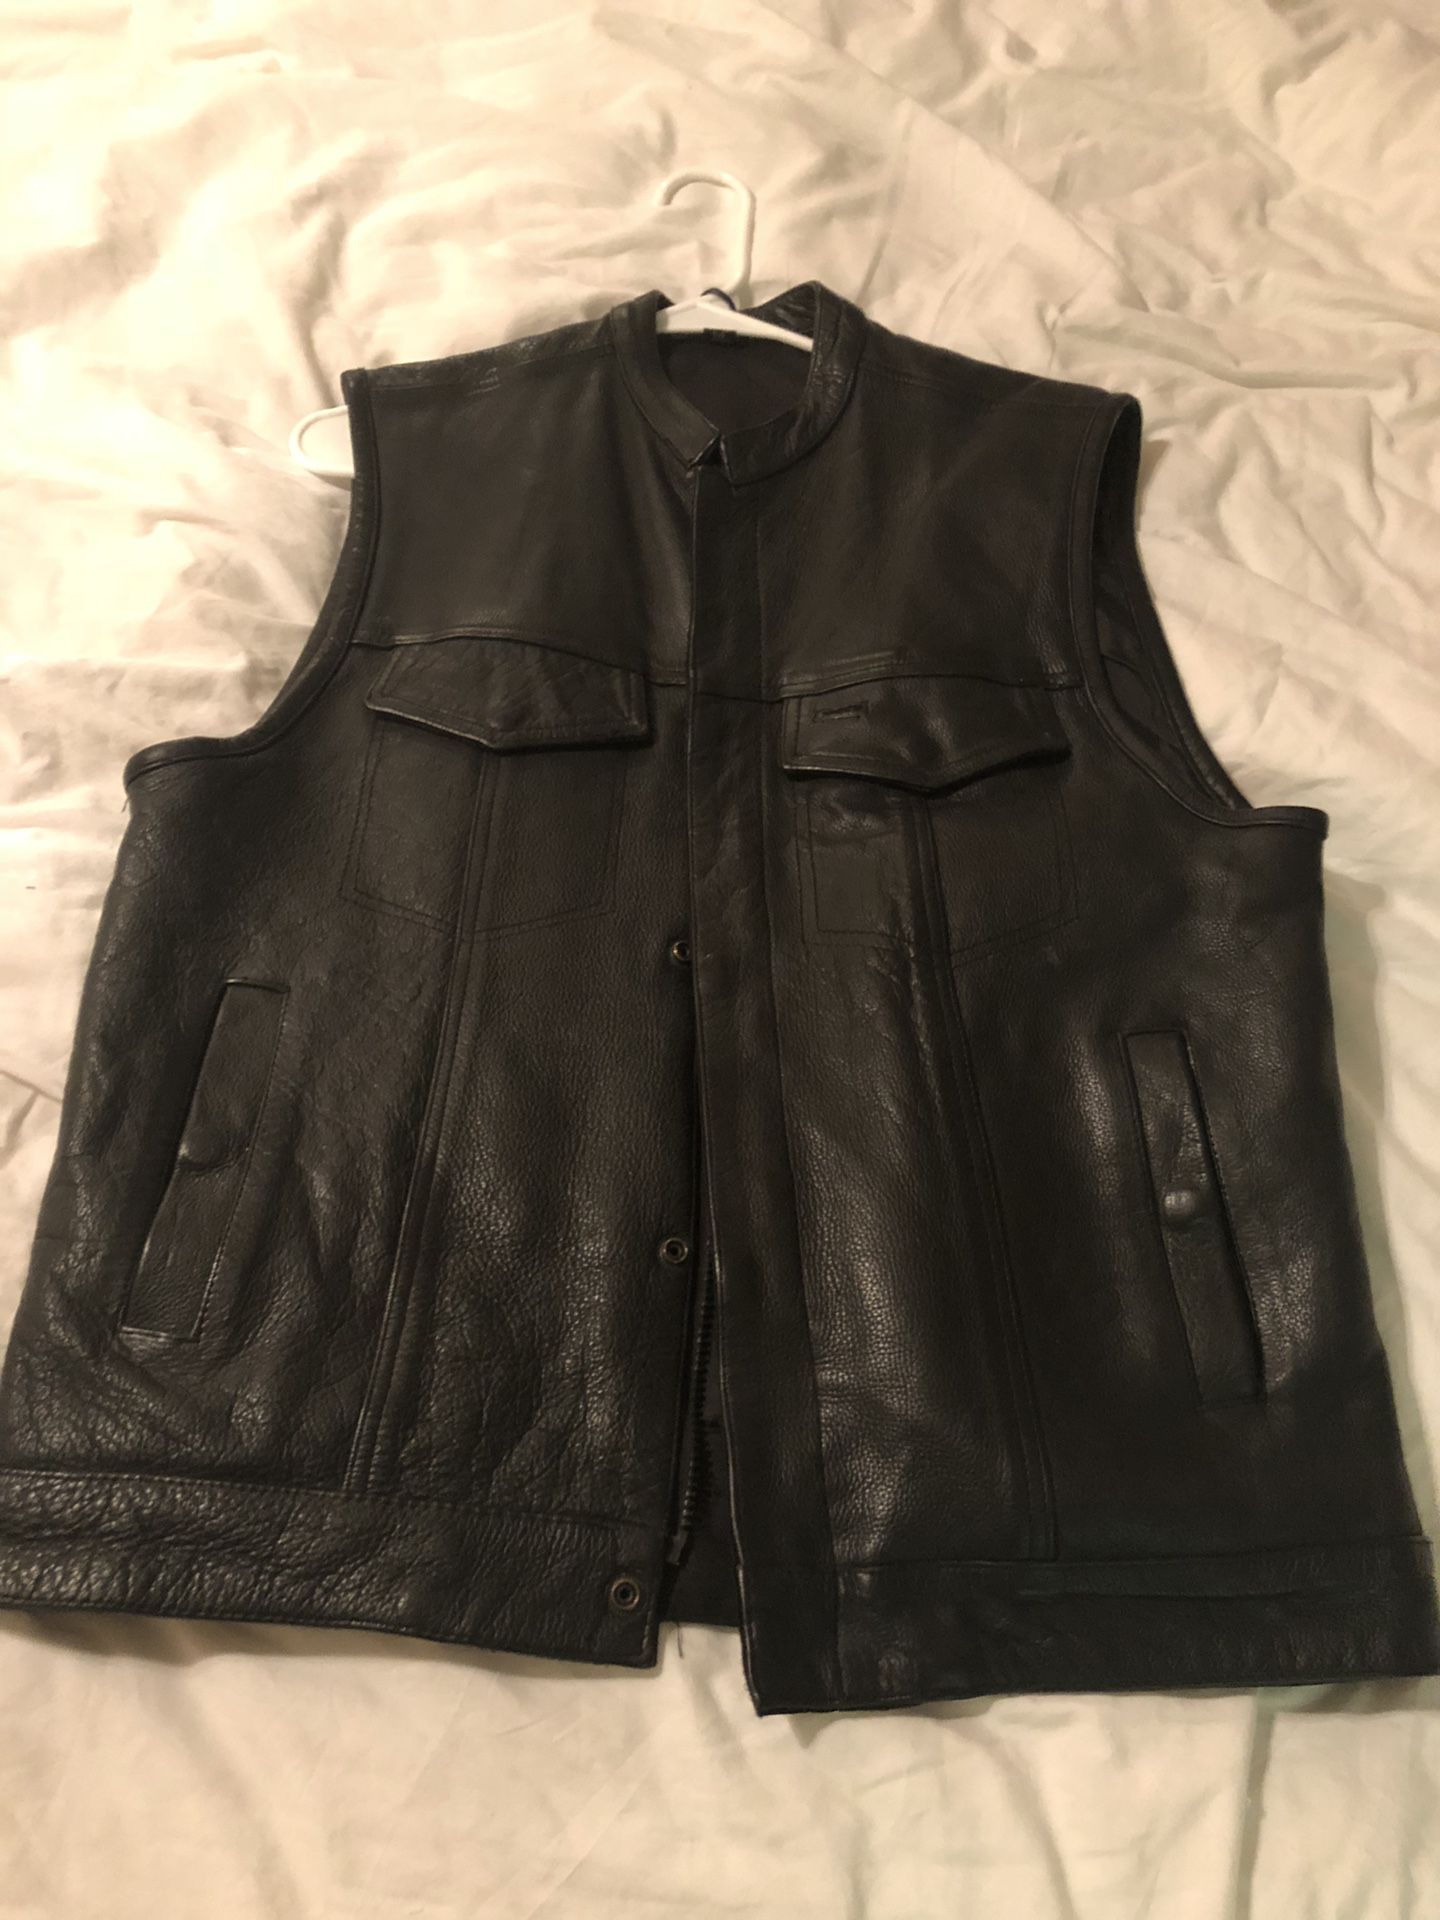 Leather riding vest size medium